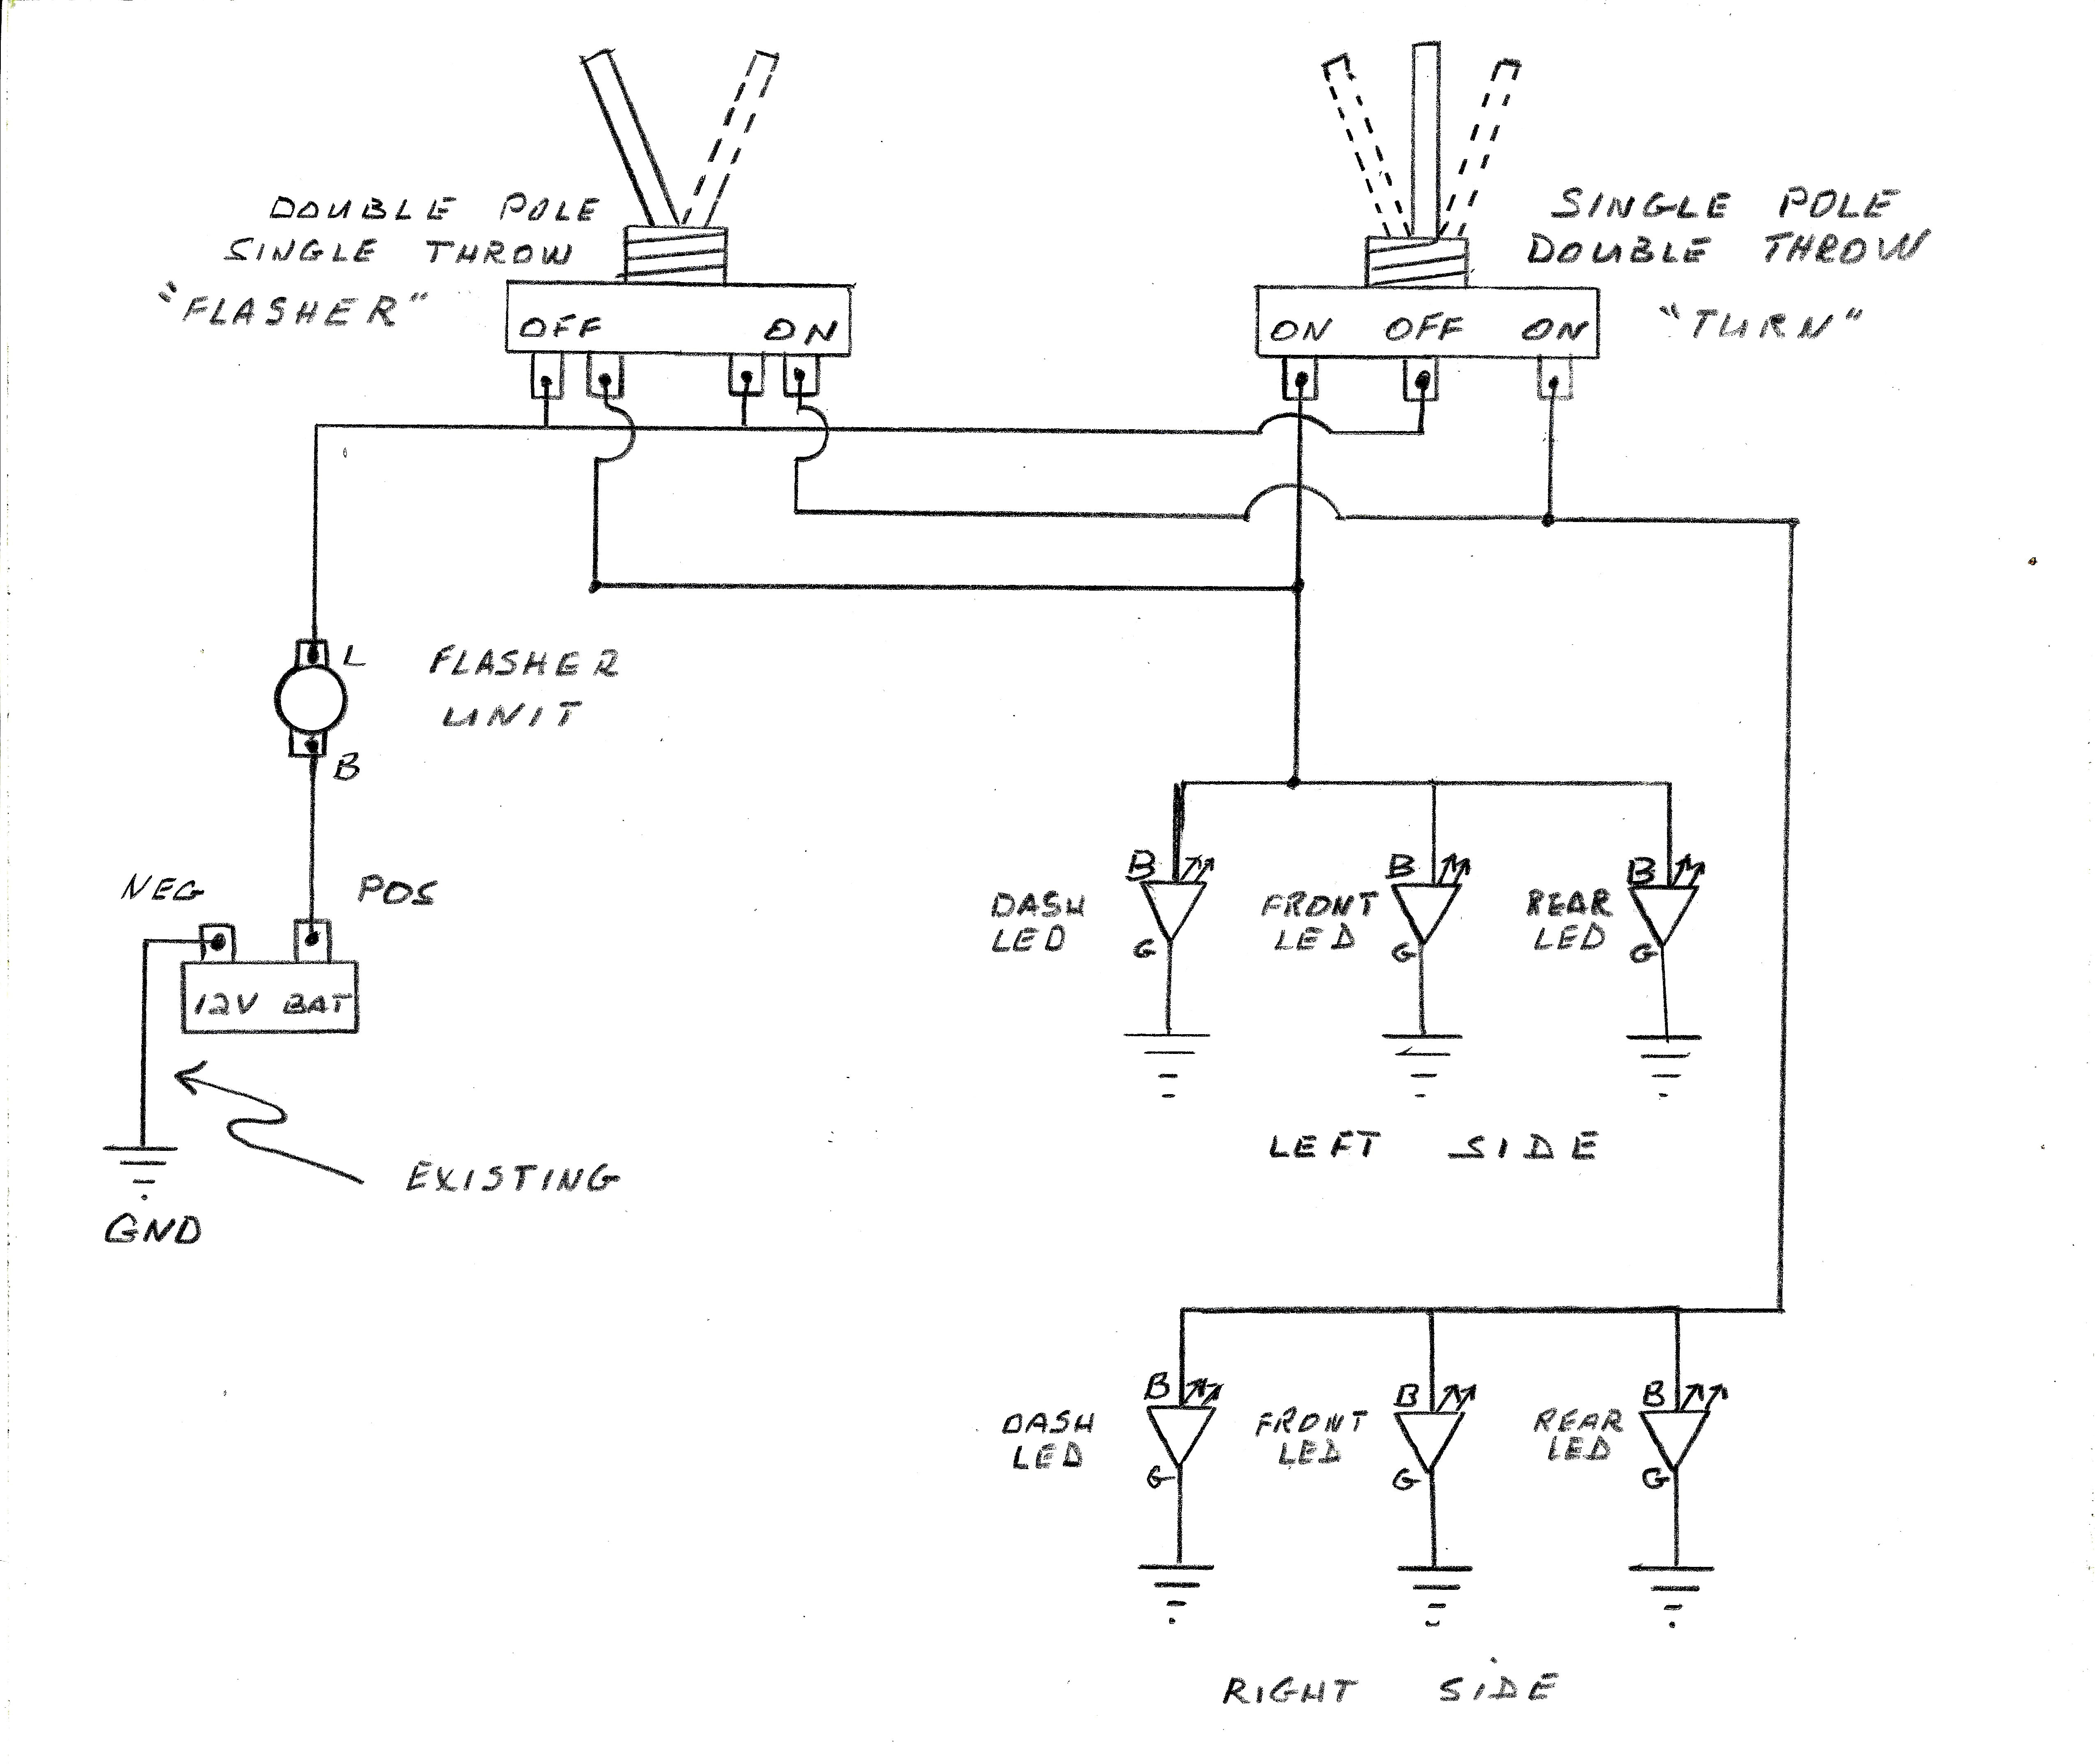 Universal Turn Signal Switch Wiring Diagram | Wiring Diagram - Universal Turn Signal Wiring Diagram